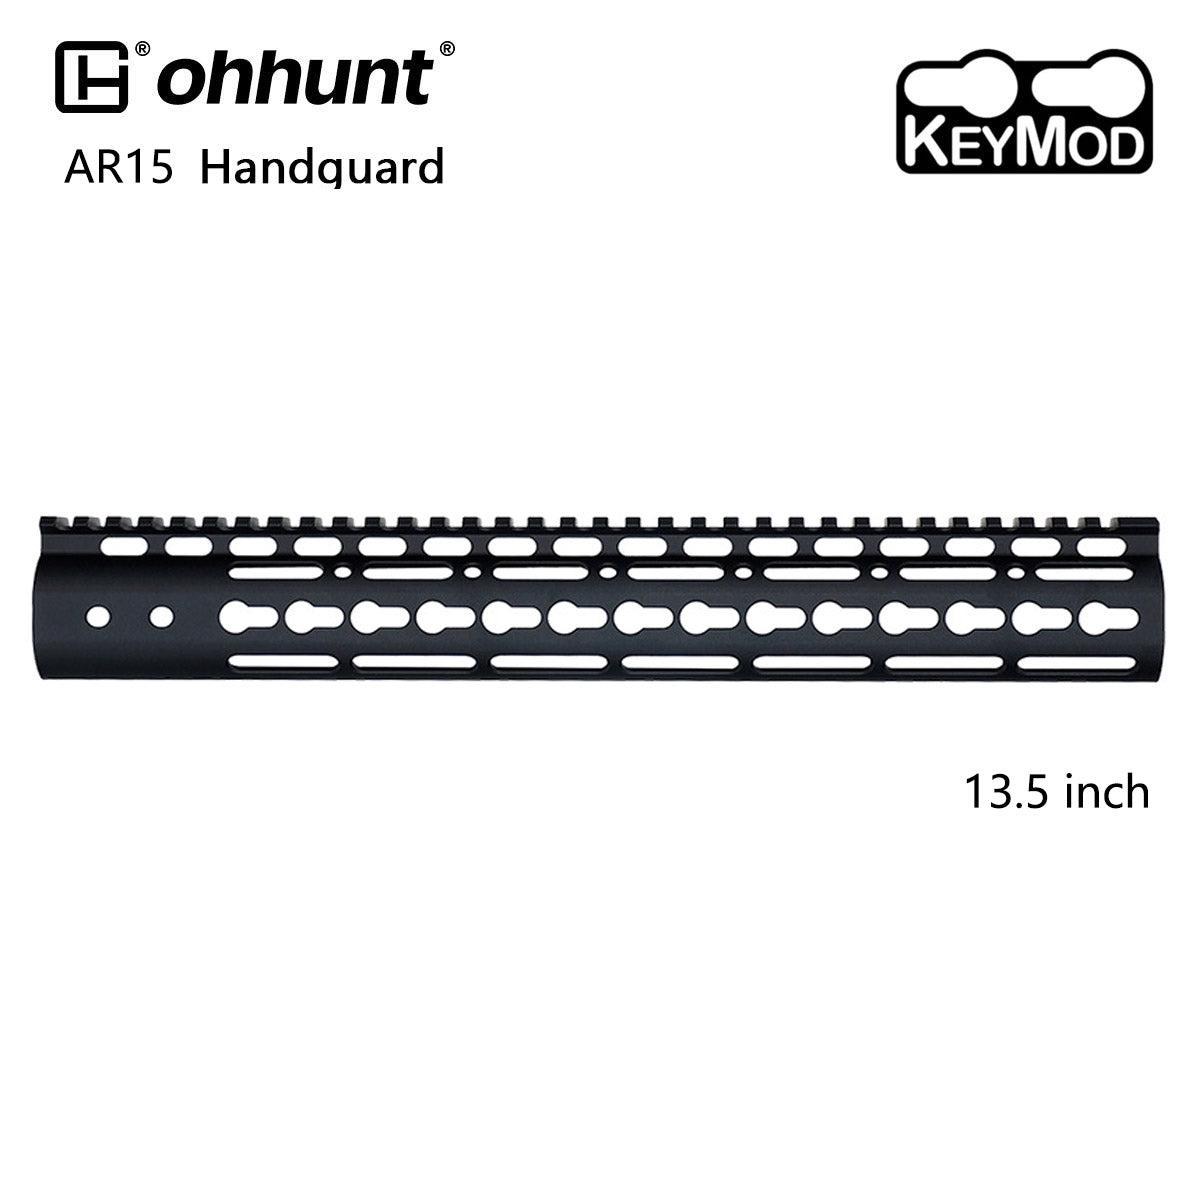 13.5 inch Keymod handguard